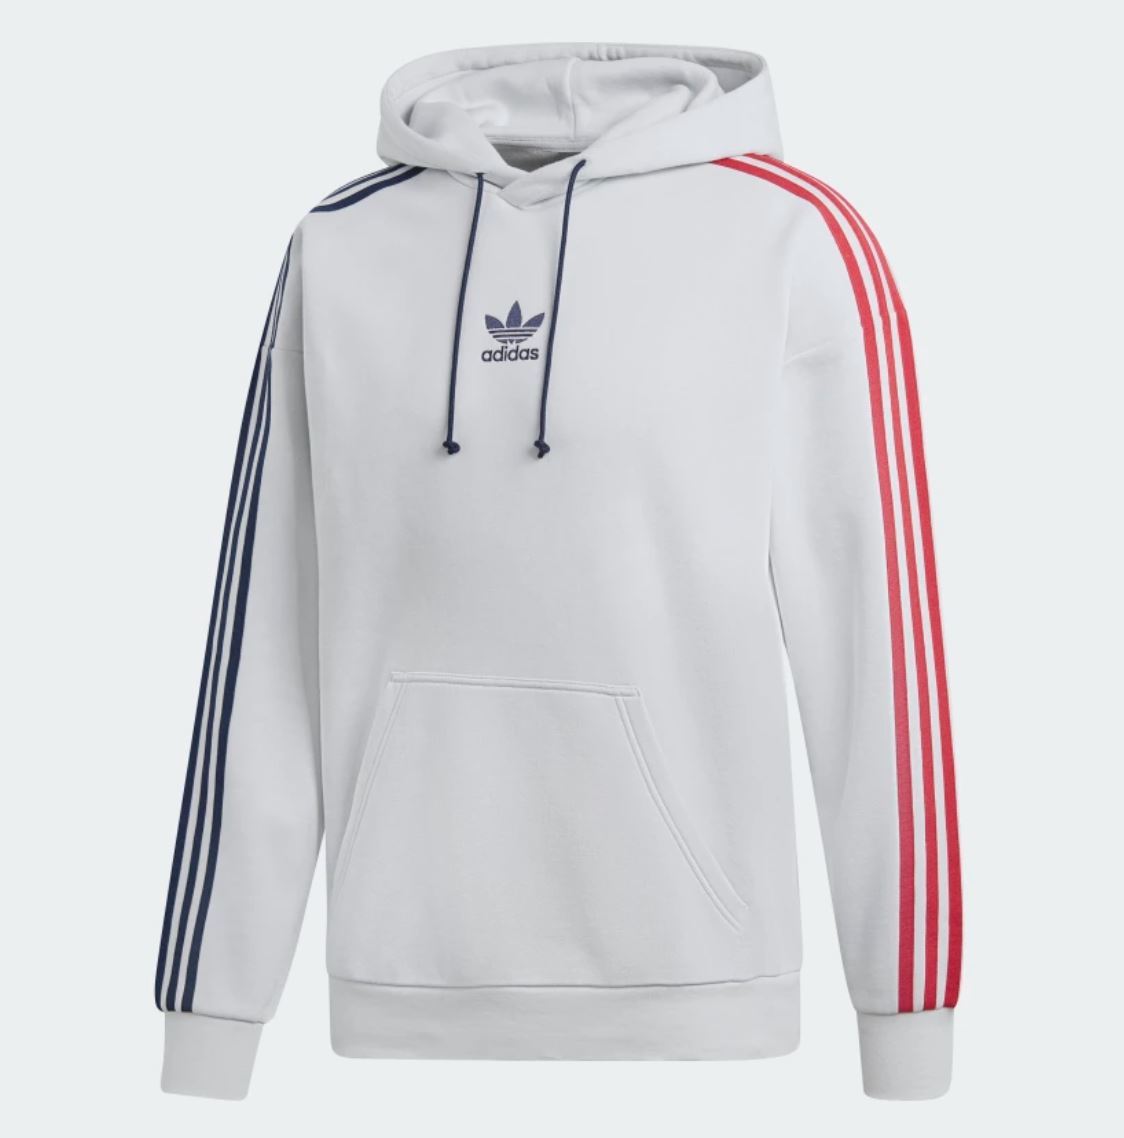 New Adidas Originals Men style Jacket and 31 similar items